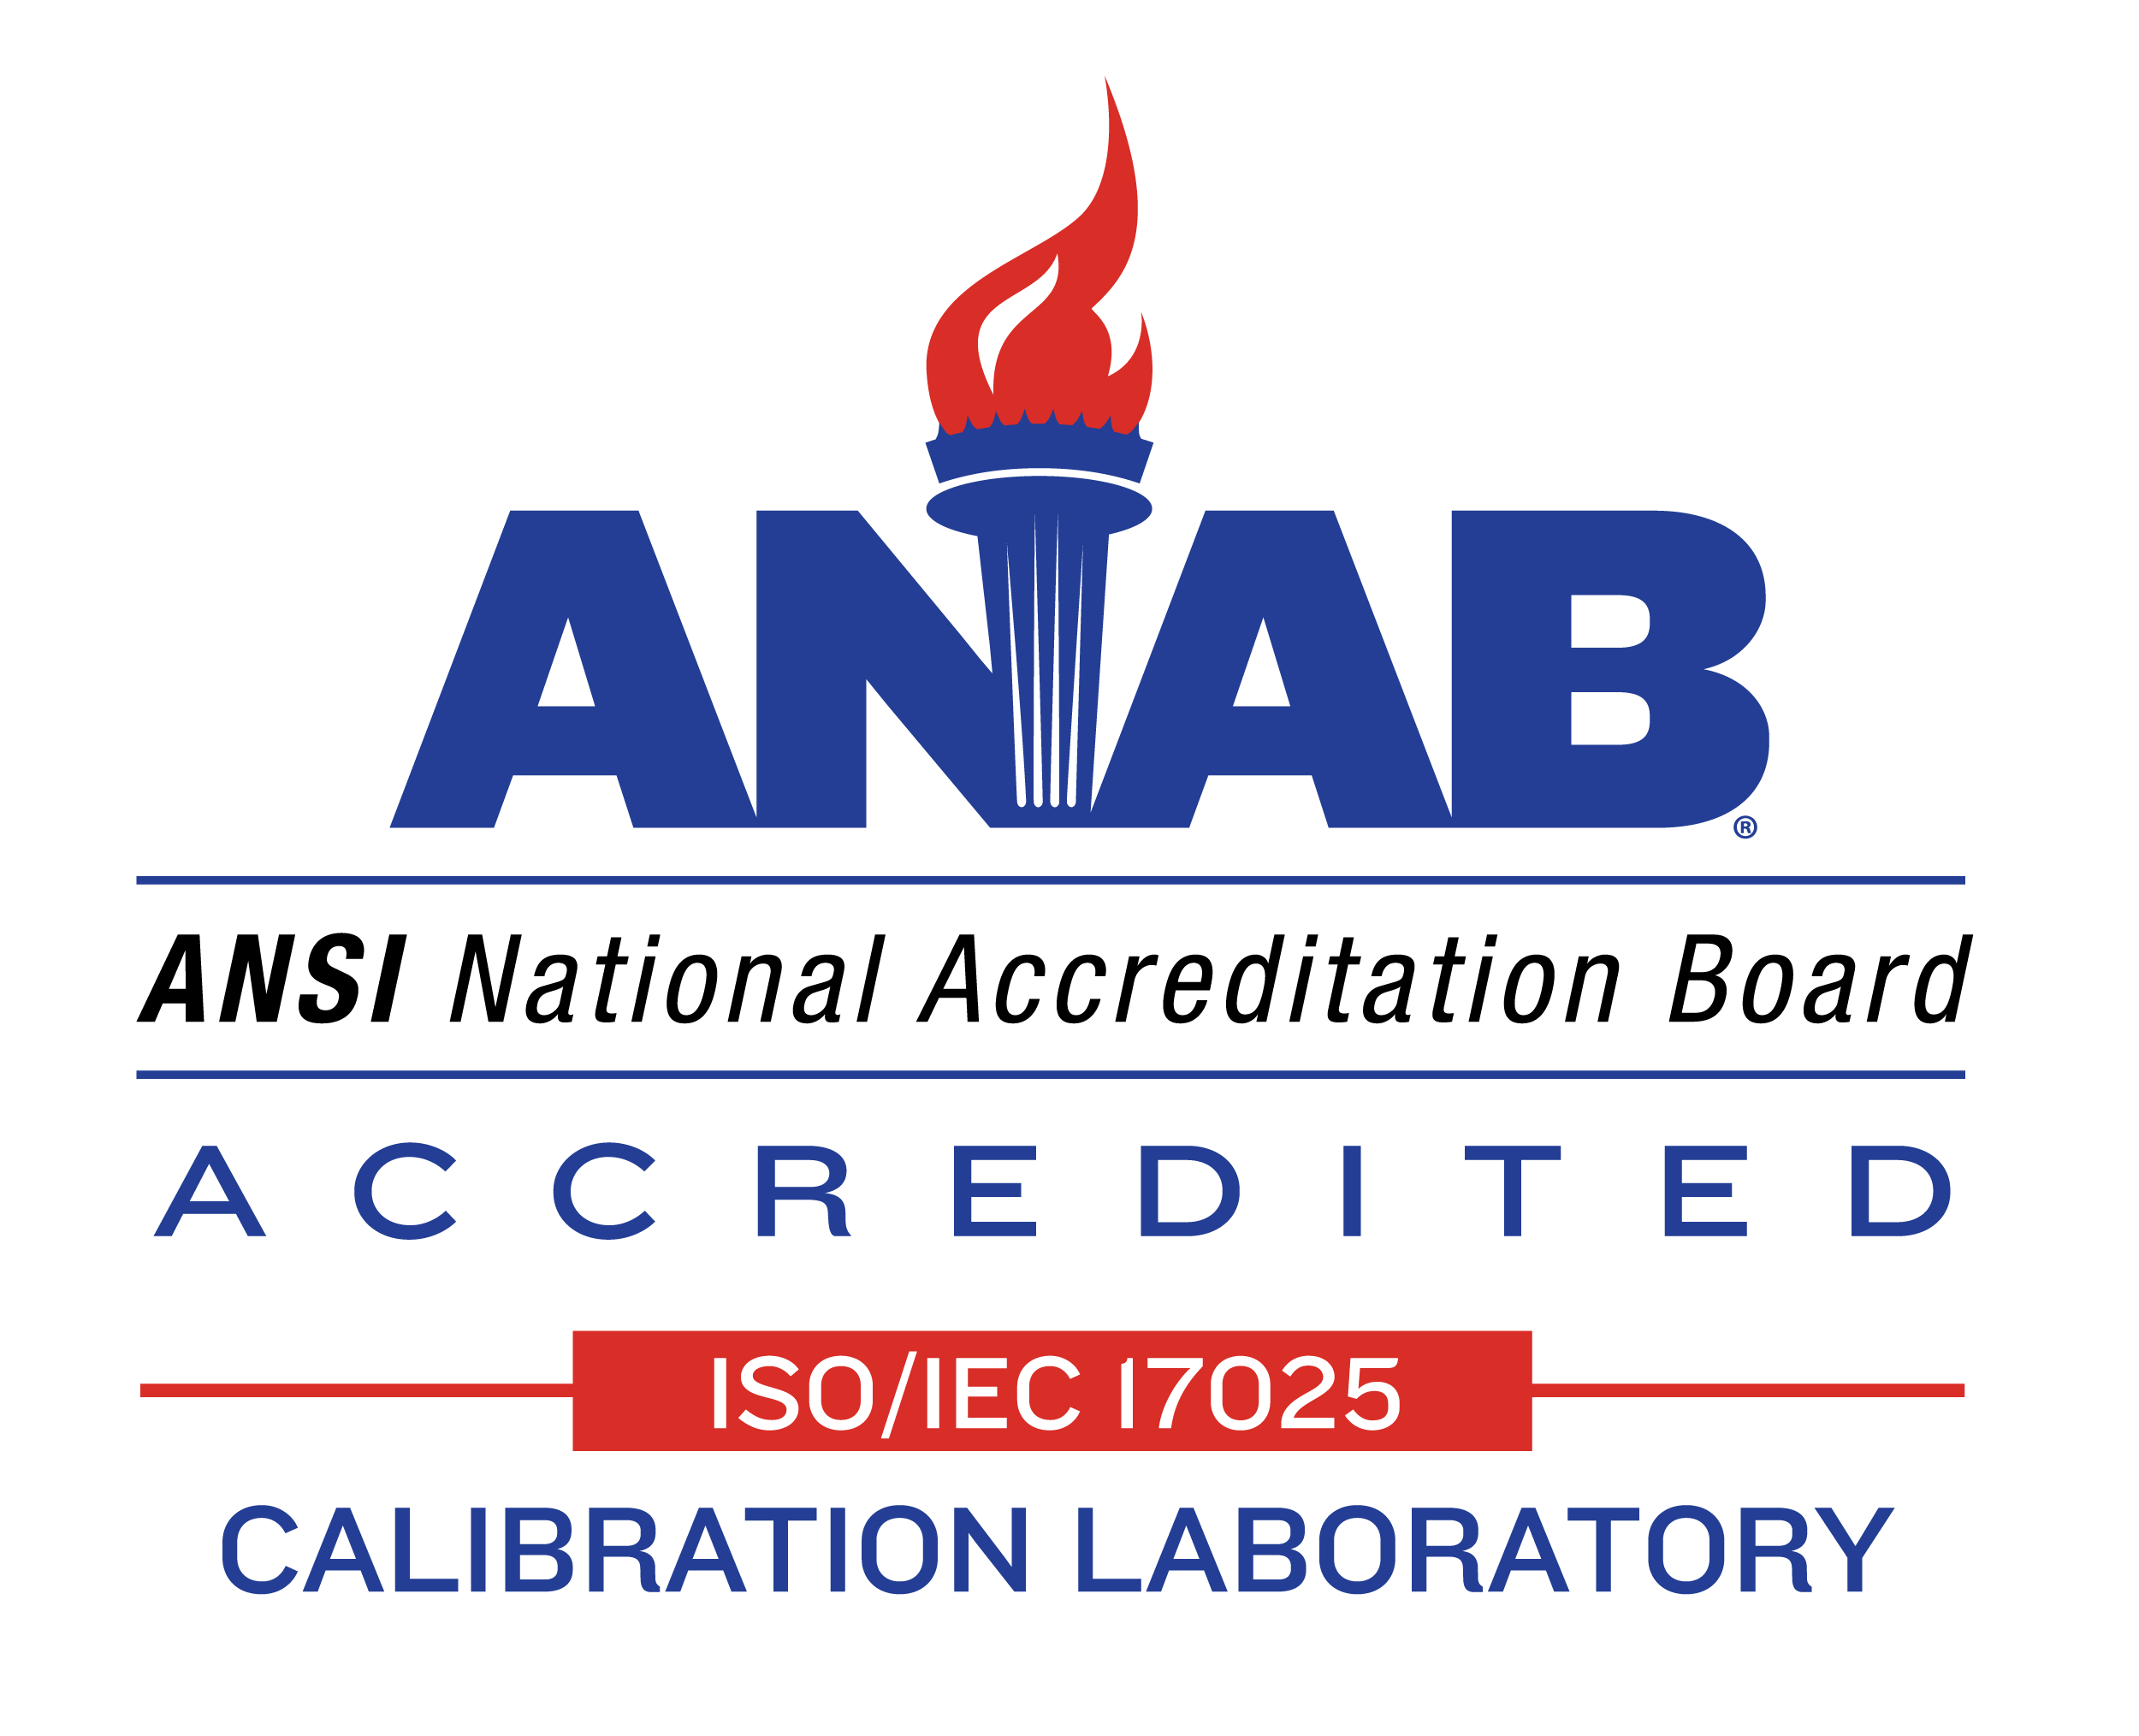 ANAB Accredited ISO/IEC 17025 Calibration Laboratory